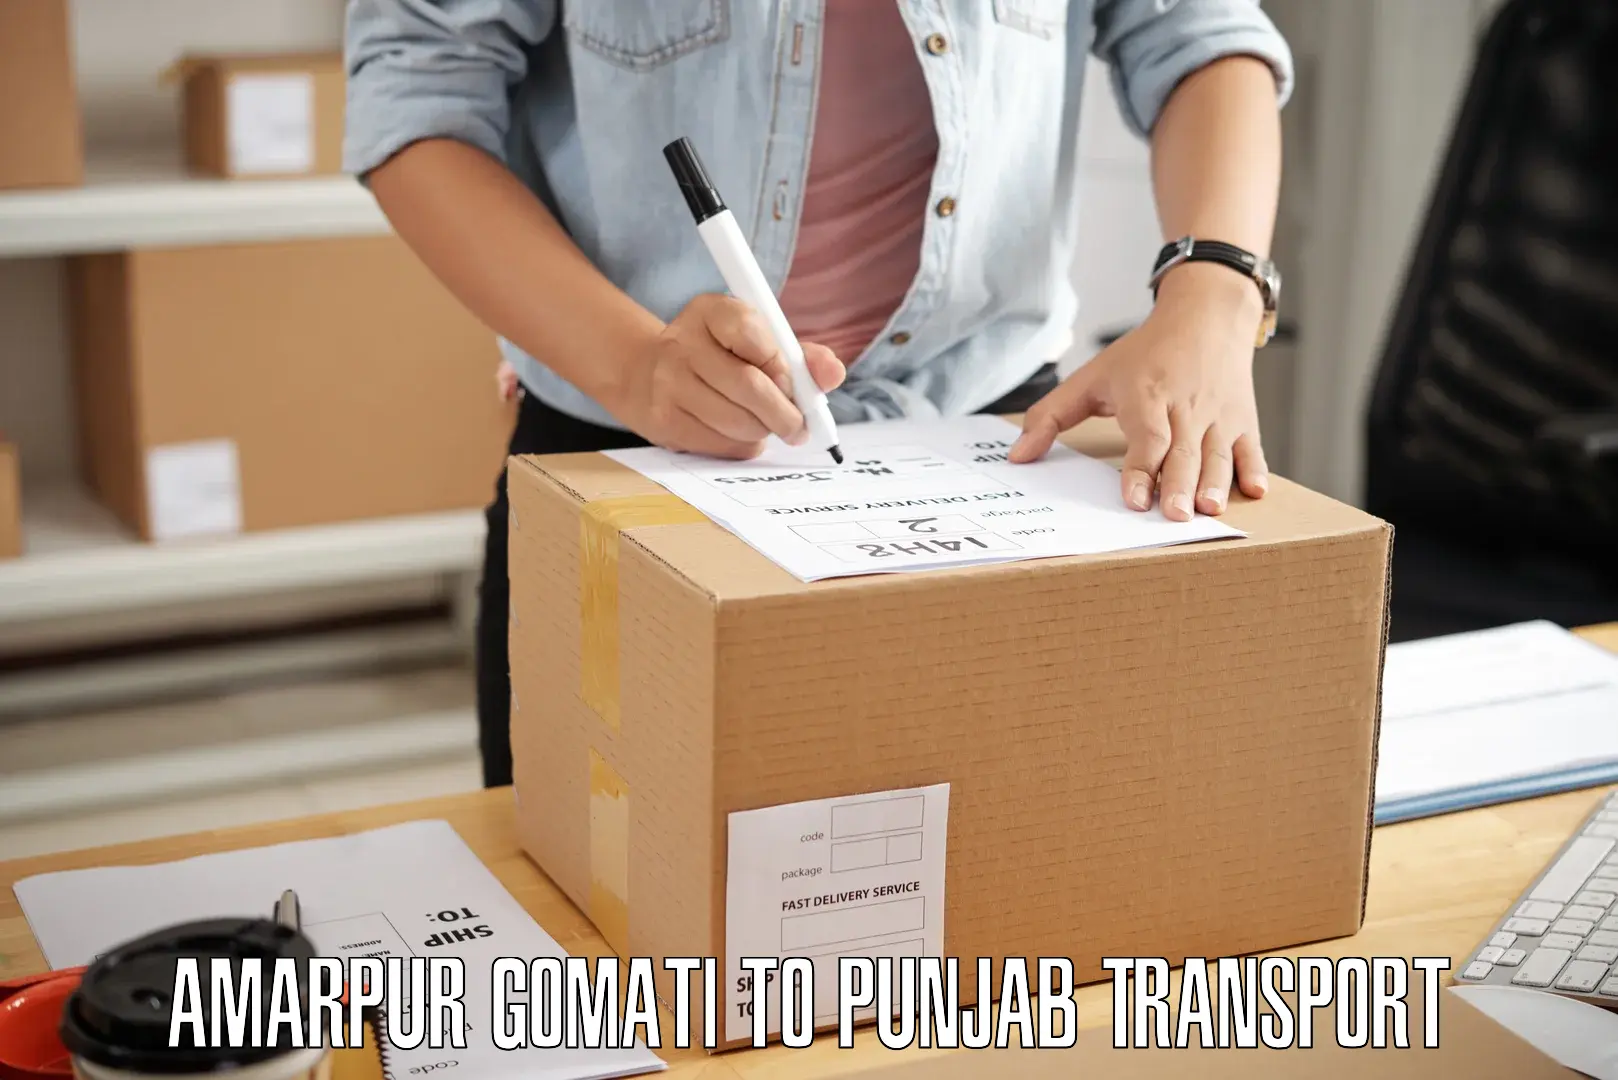 Pick up transport service Amarpur Gomati to Punjab